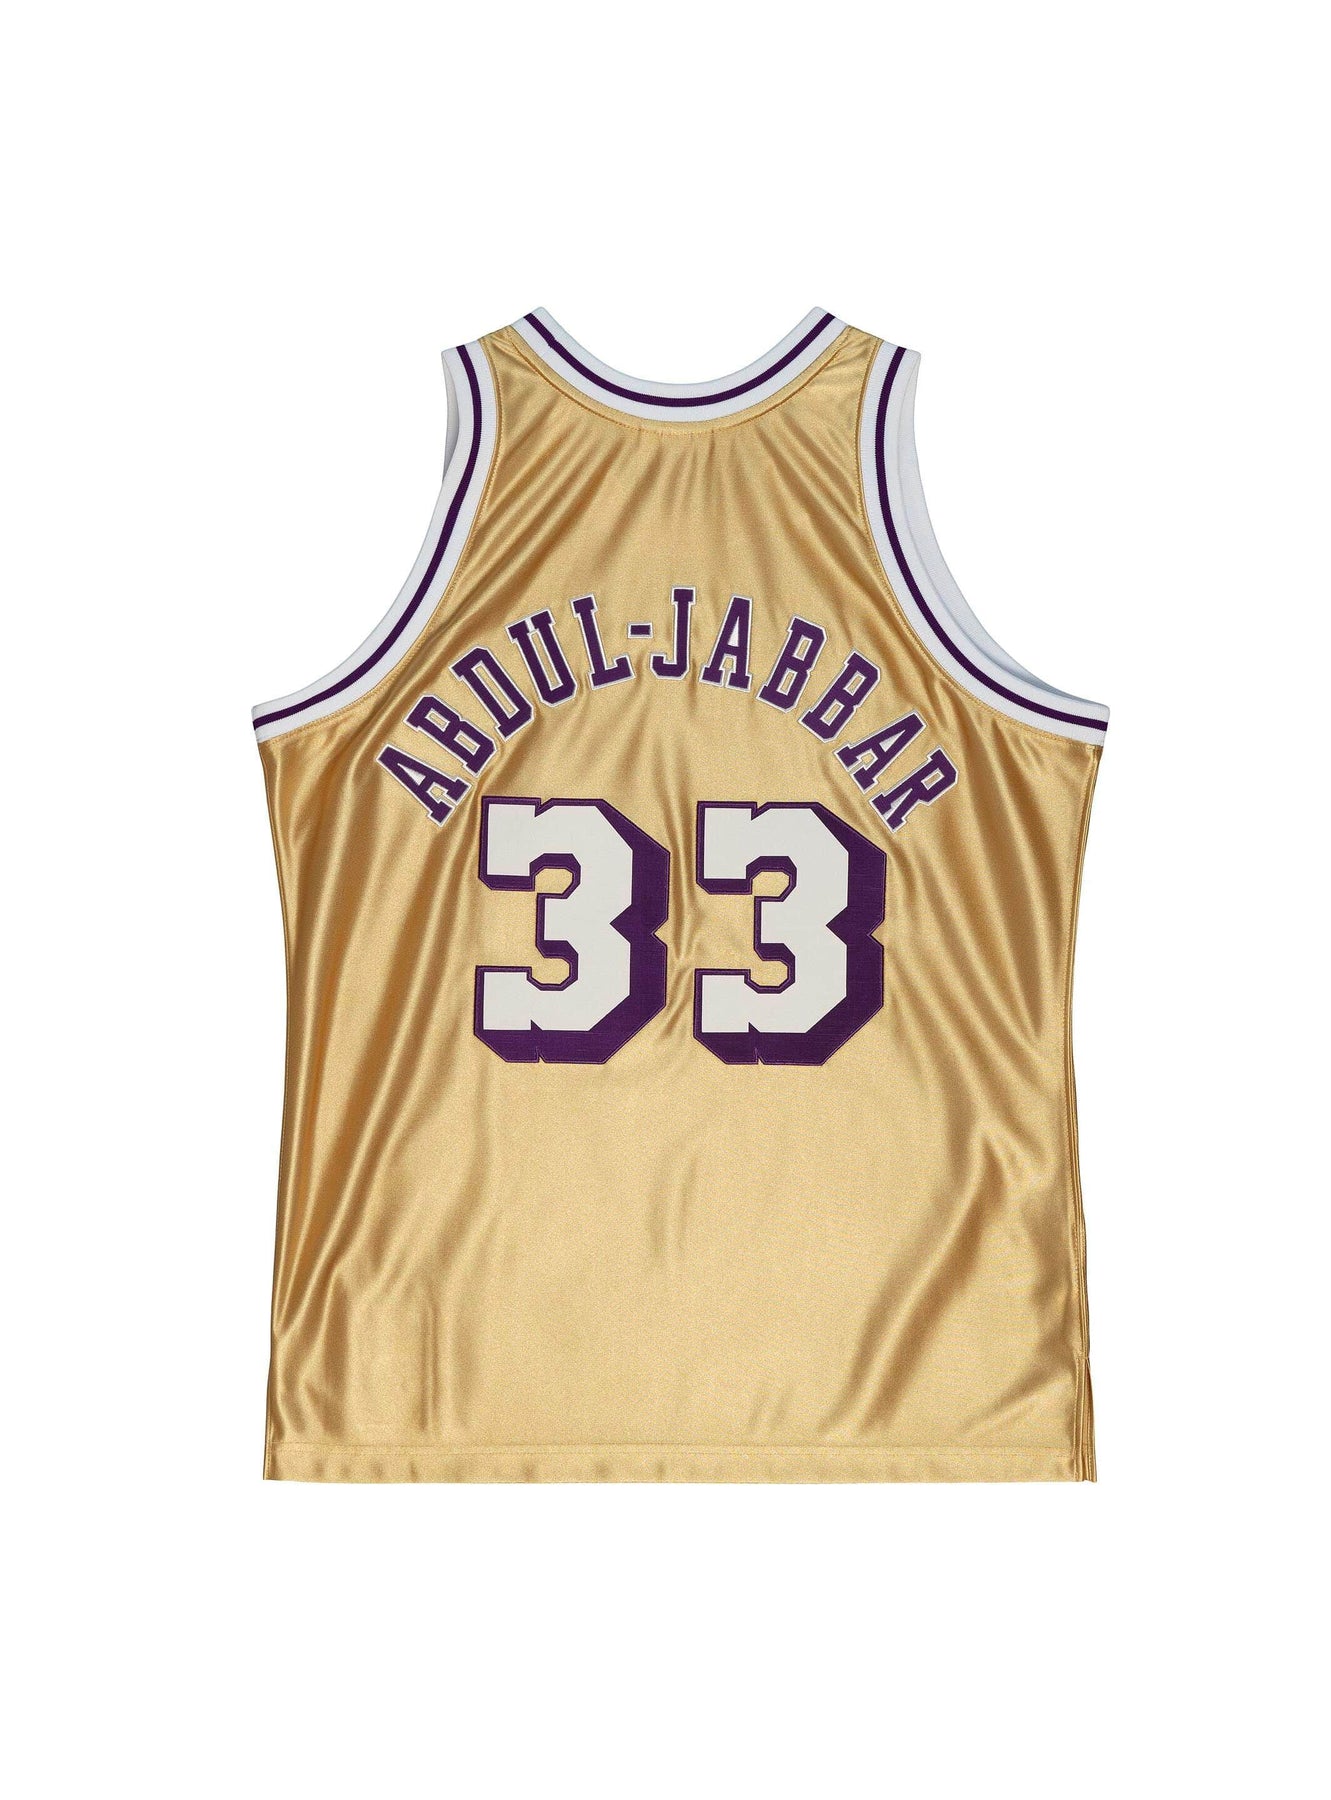 Kareem Abdul-Jabbar Los Angeles Lakers NBA Jerseys for sale